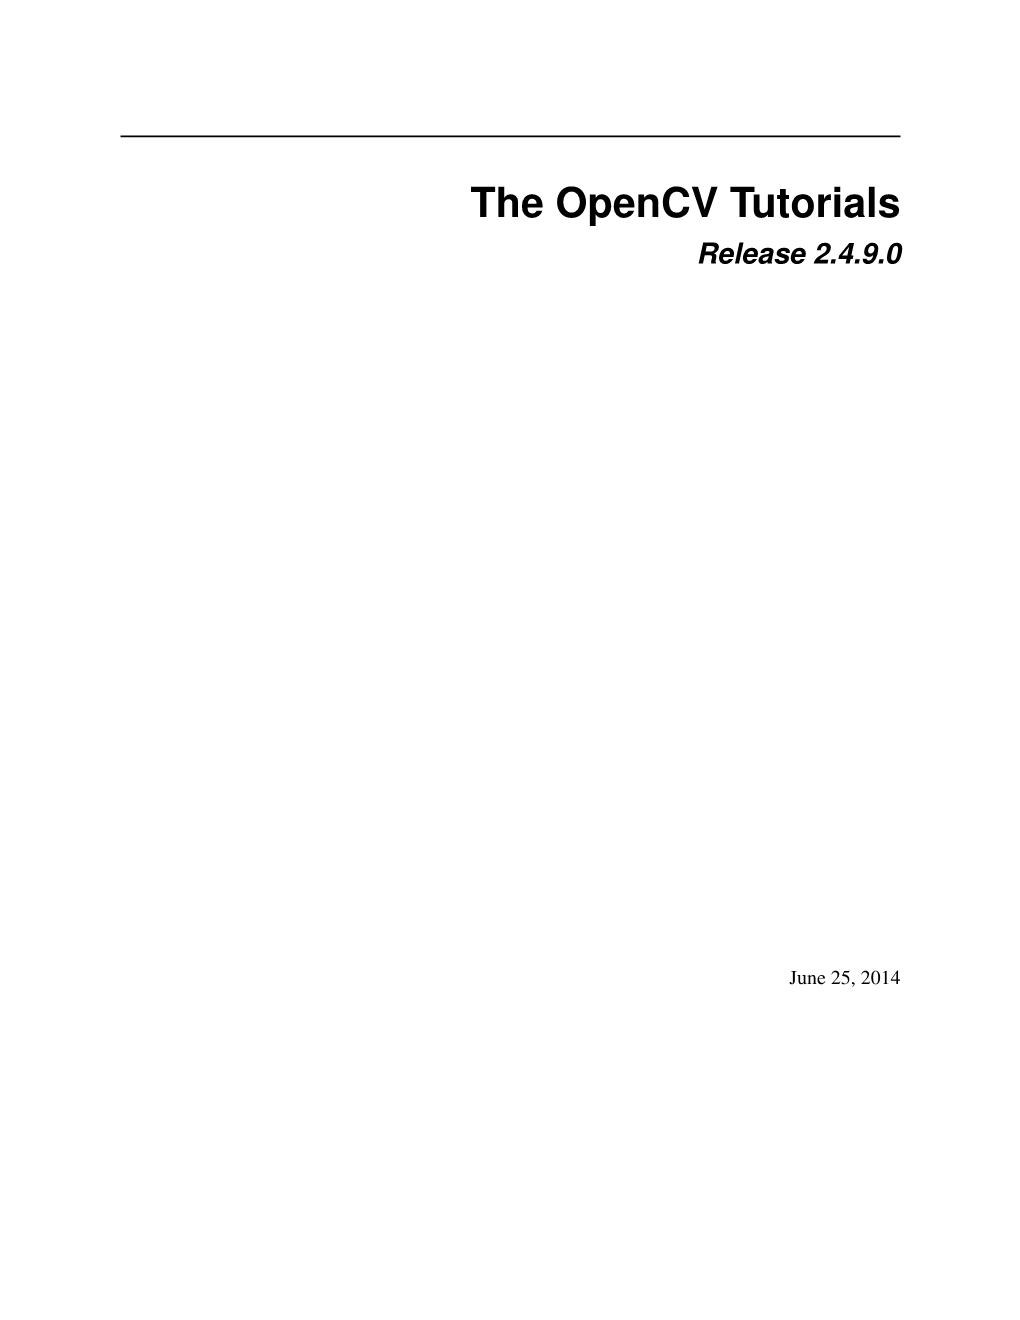 The Opencv Tutorials Release 2.4.9.0